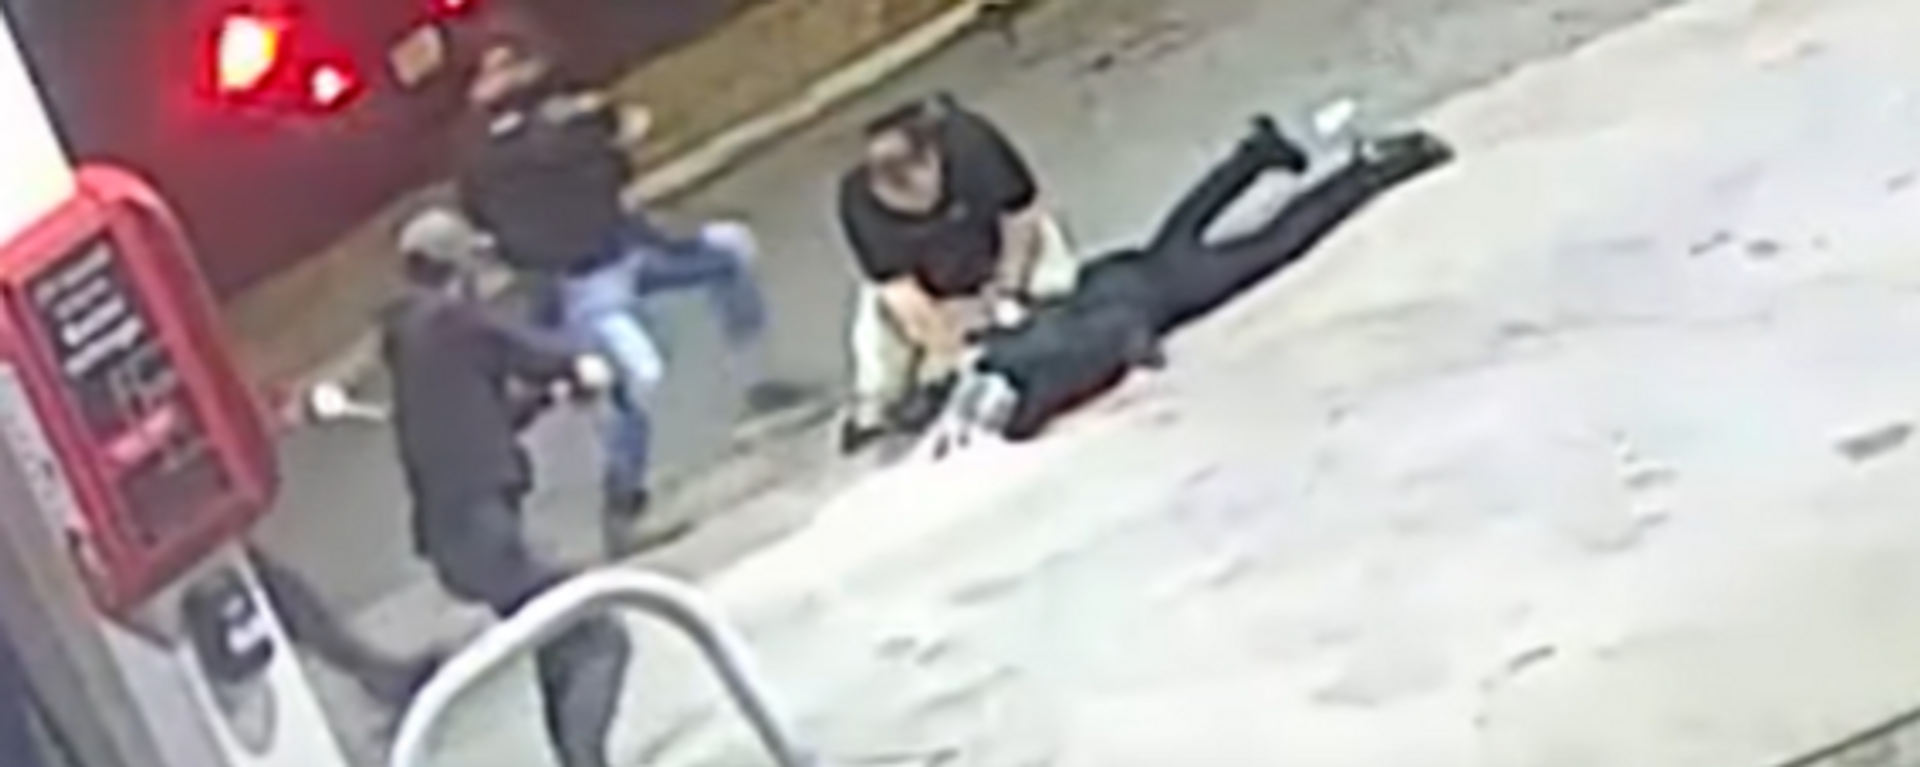 RAW: Video shows homeless shooting suspect taken into custody by police - Sputnik International, 1920, 16.03.2022